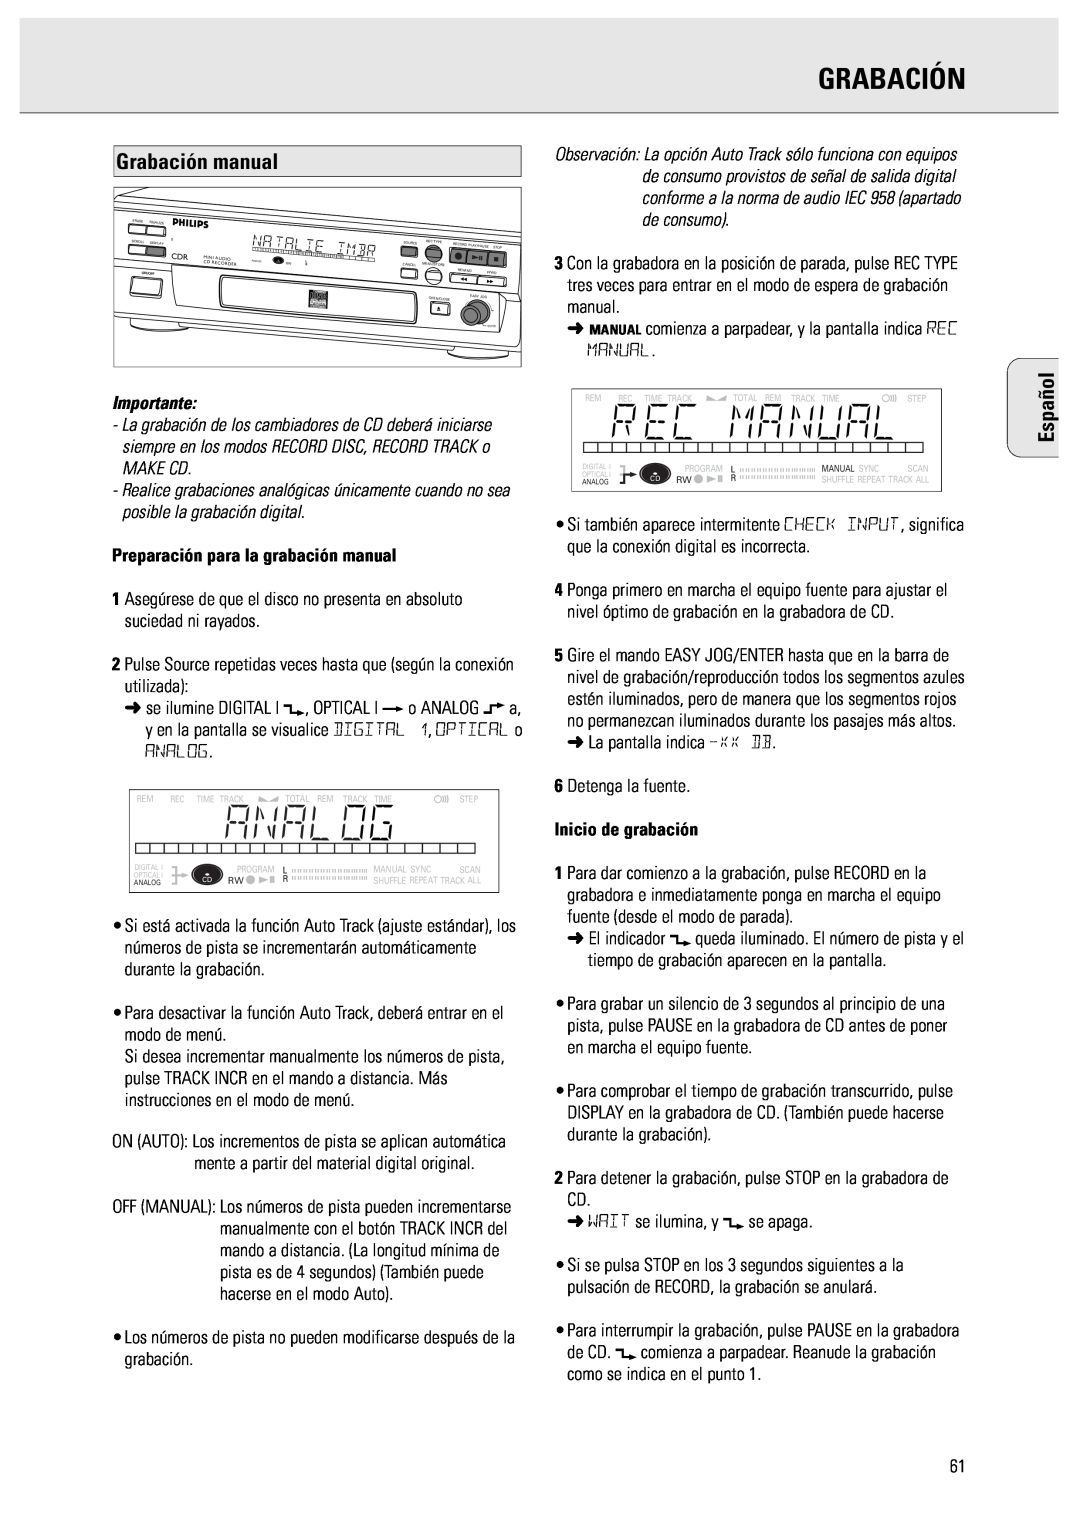 Philips CDR570 Grabación manual, Español, Make Cd, Preparación para la grabación manual, Inicio de grabación 